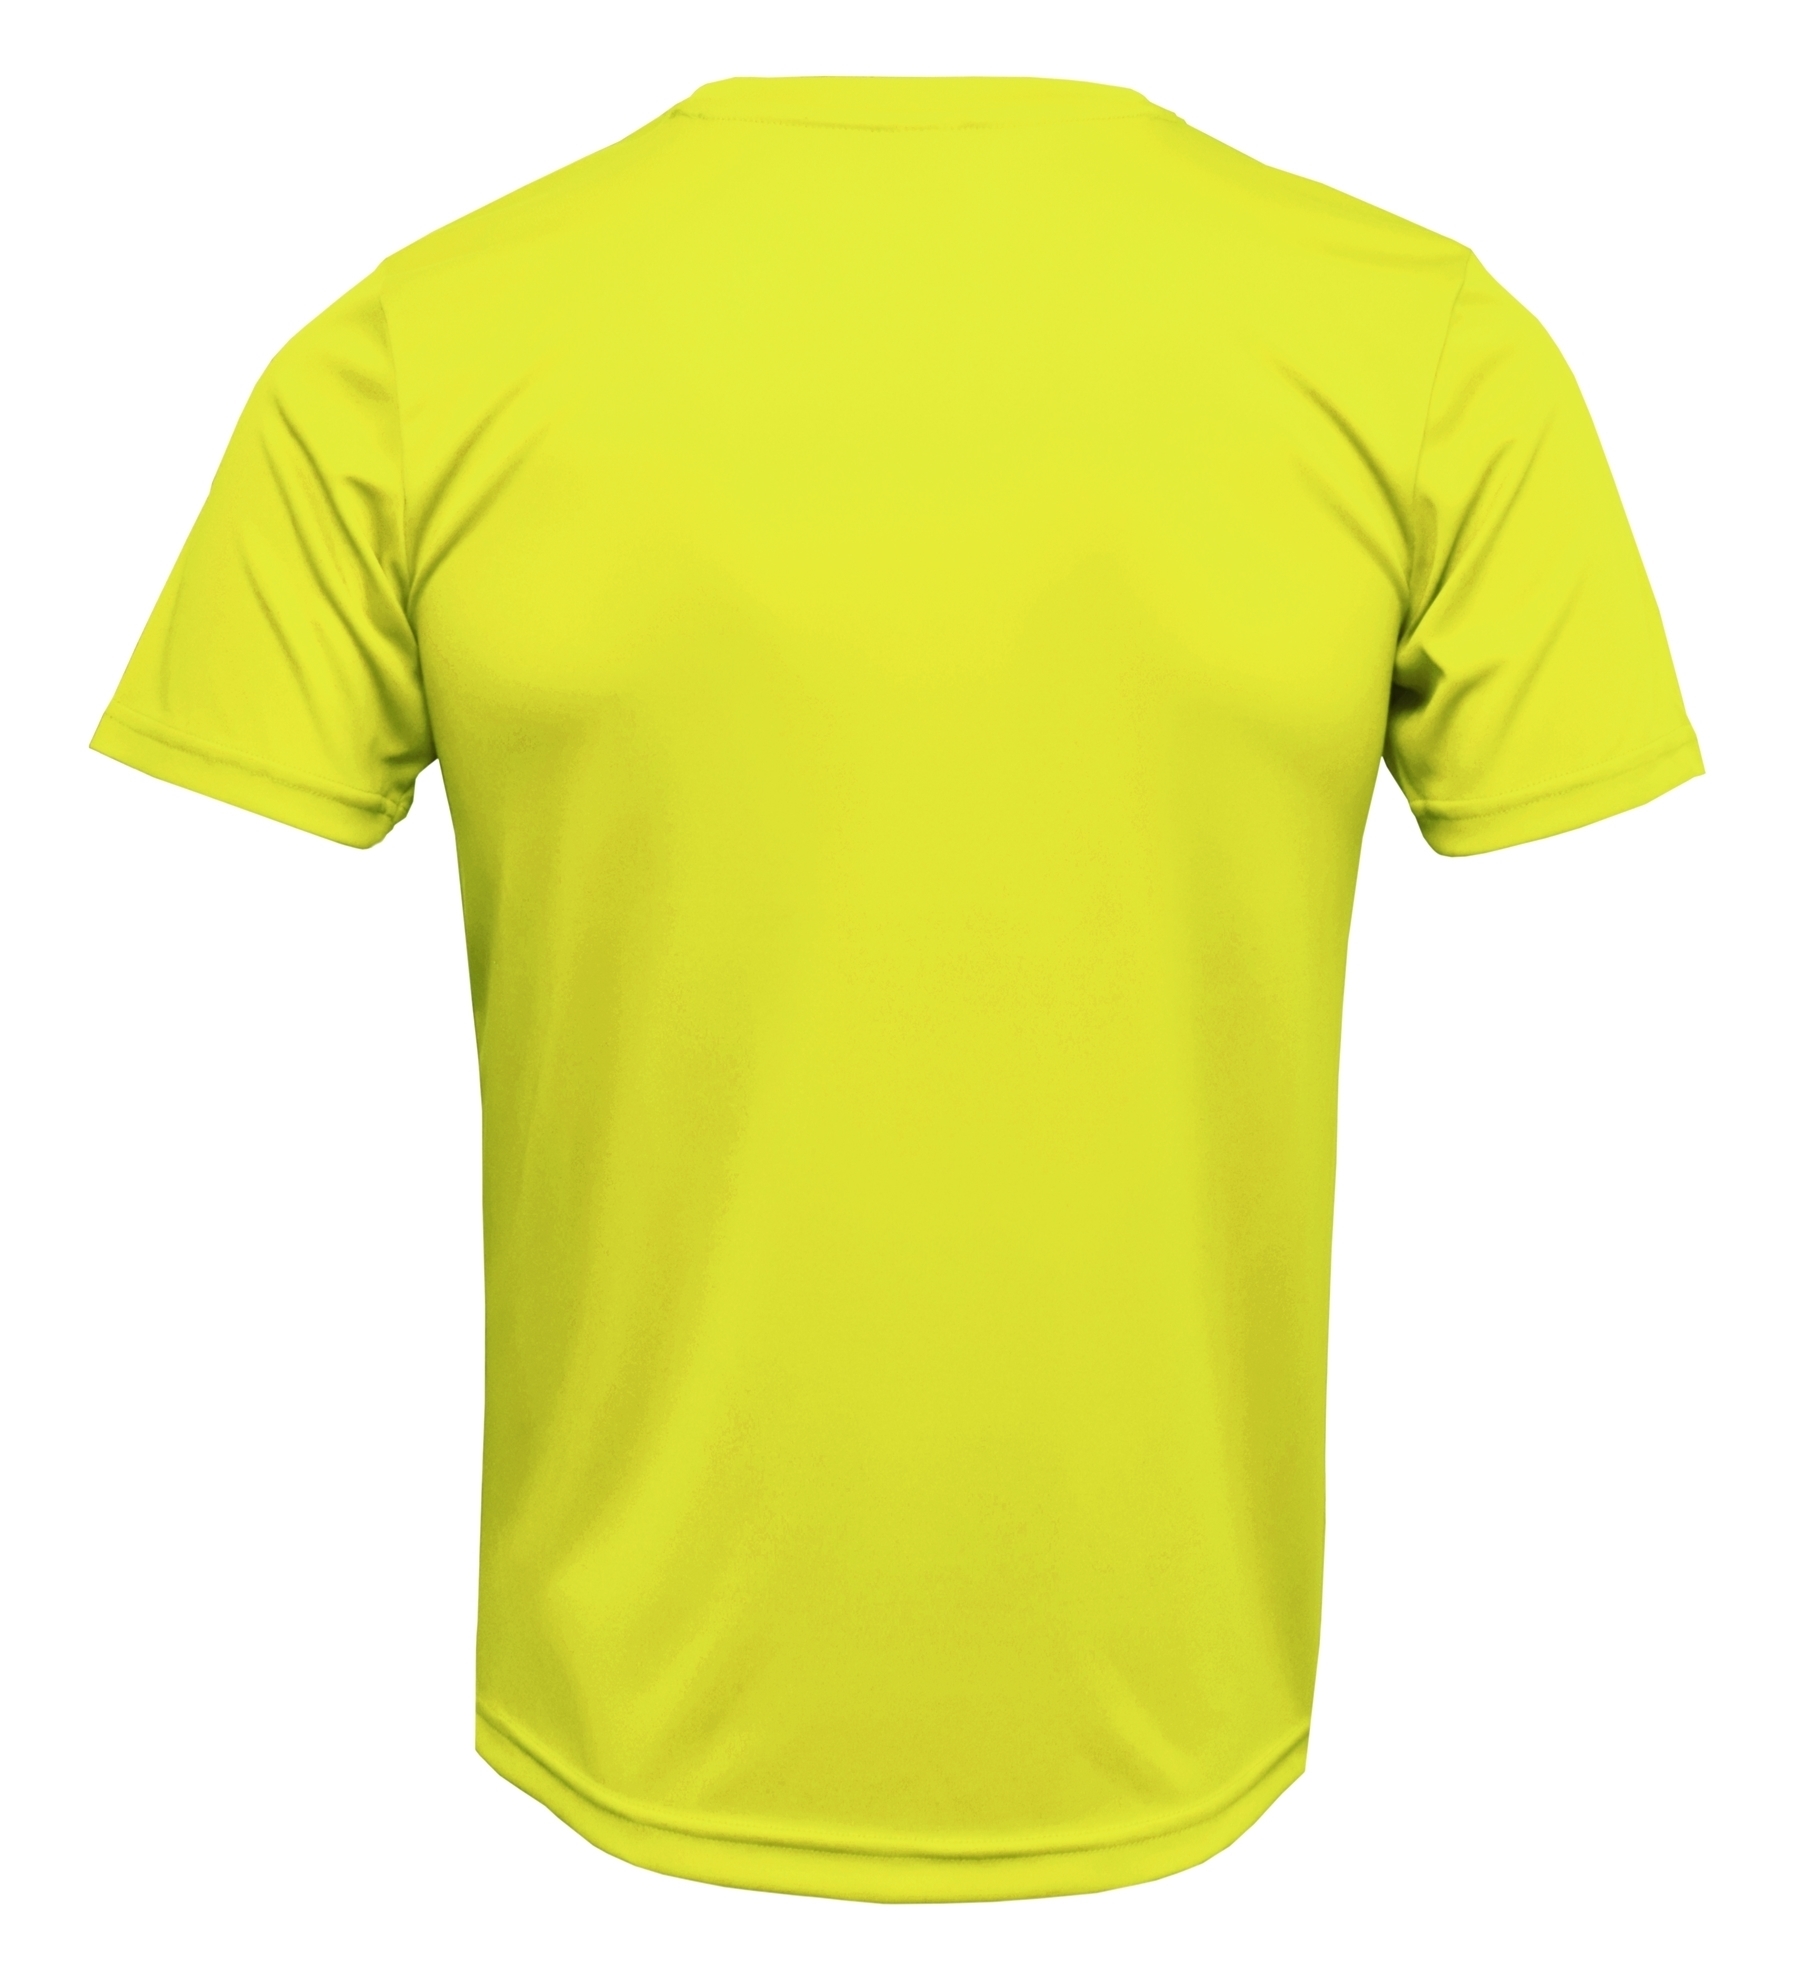 BAW Athletic Wear DT56 - Men's Dry-Tek T-Shirt $8.45 - T-Shirts